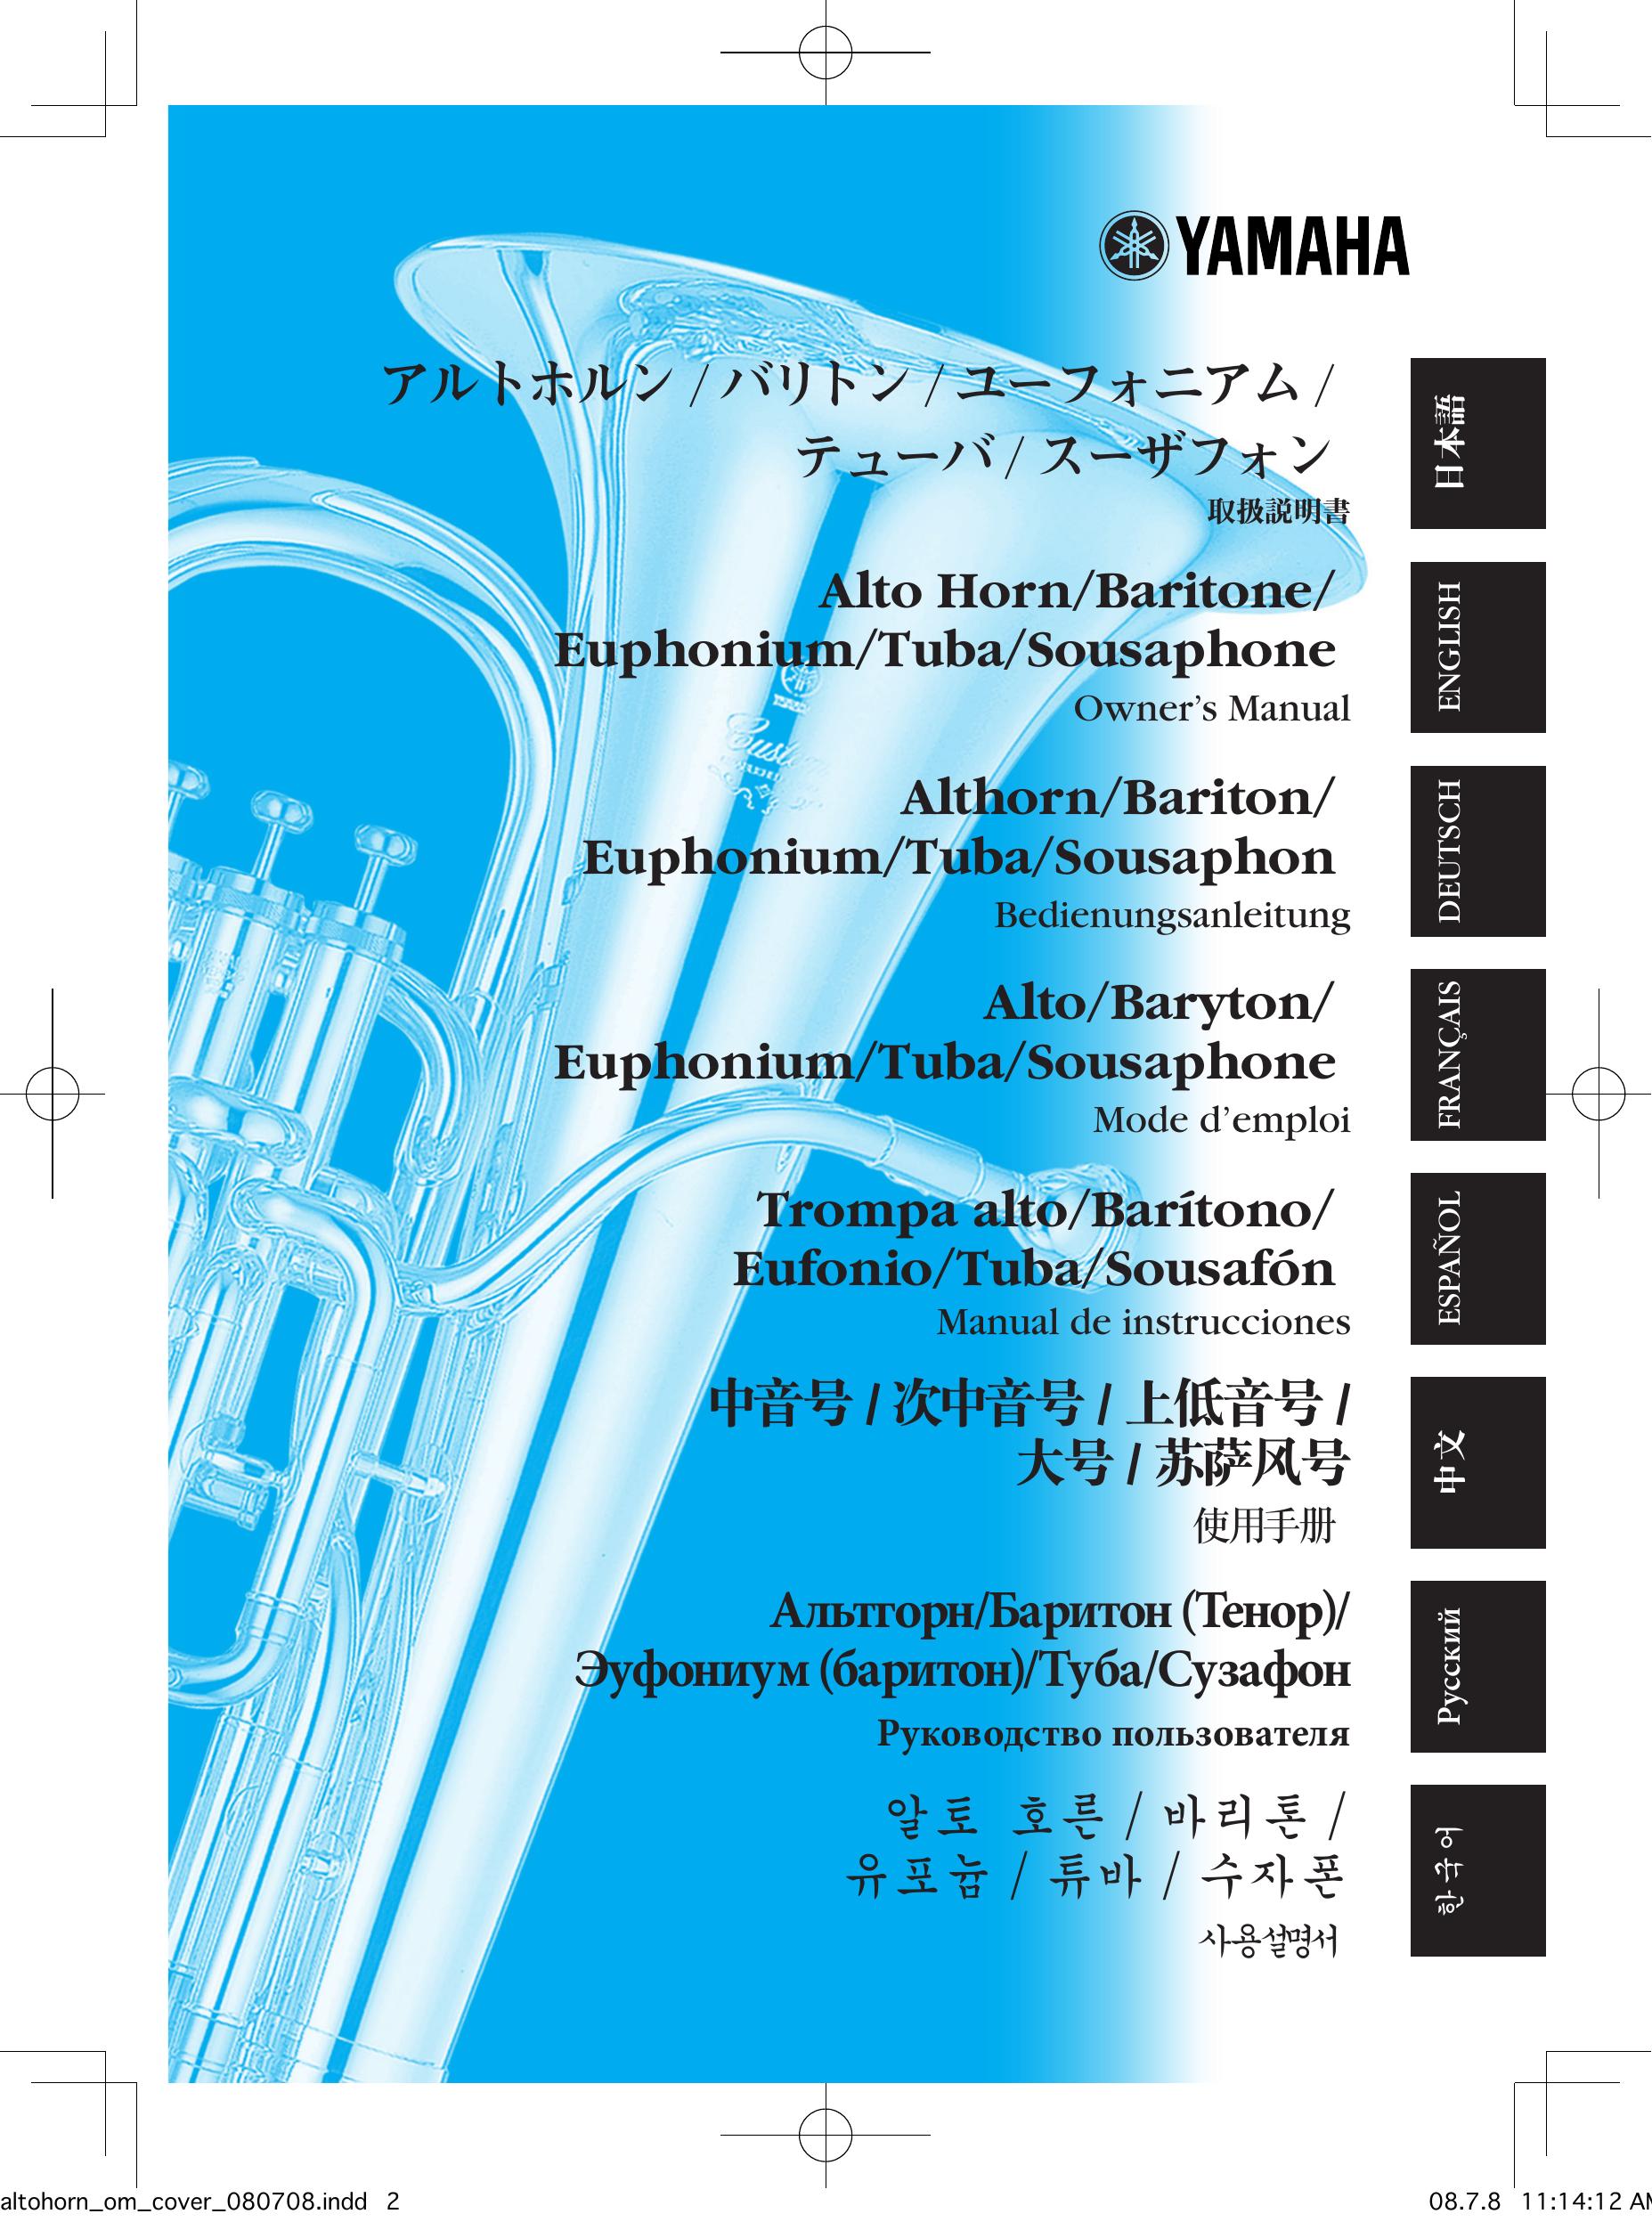 Yamaha Alto Horn/Baritone/ Euphonium/Tuba/Sousaphone Musical Instrument User Manual